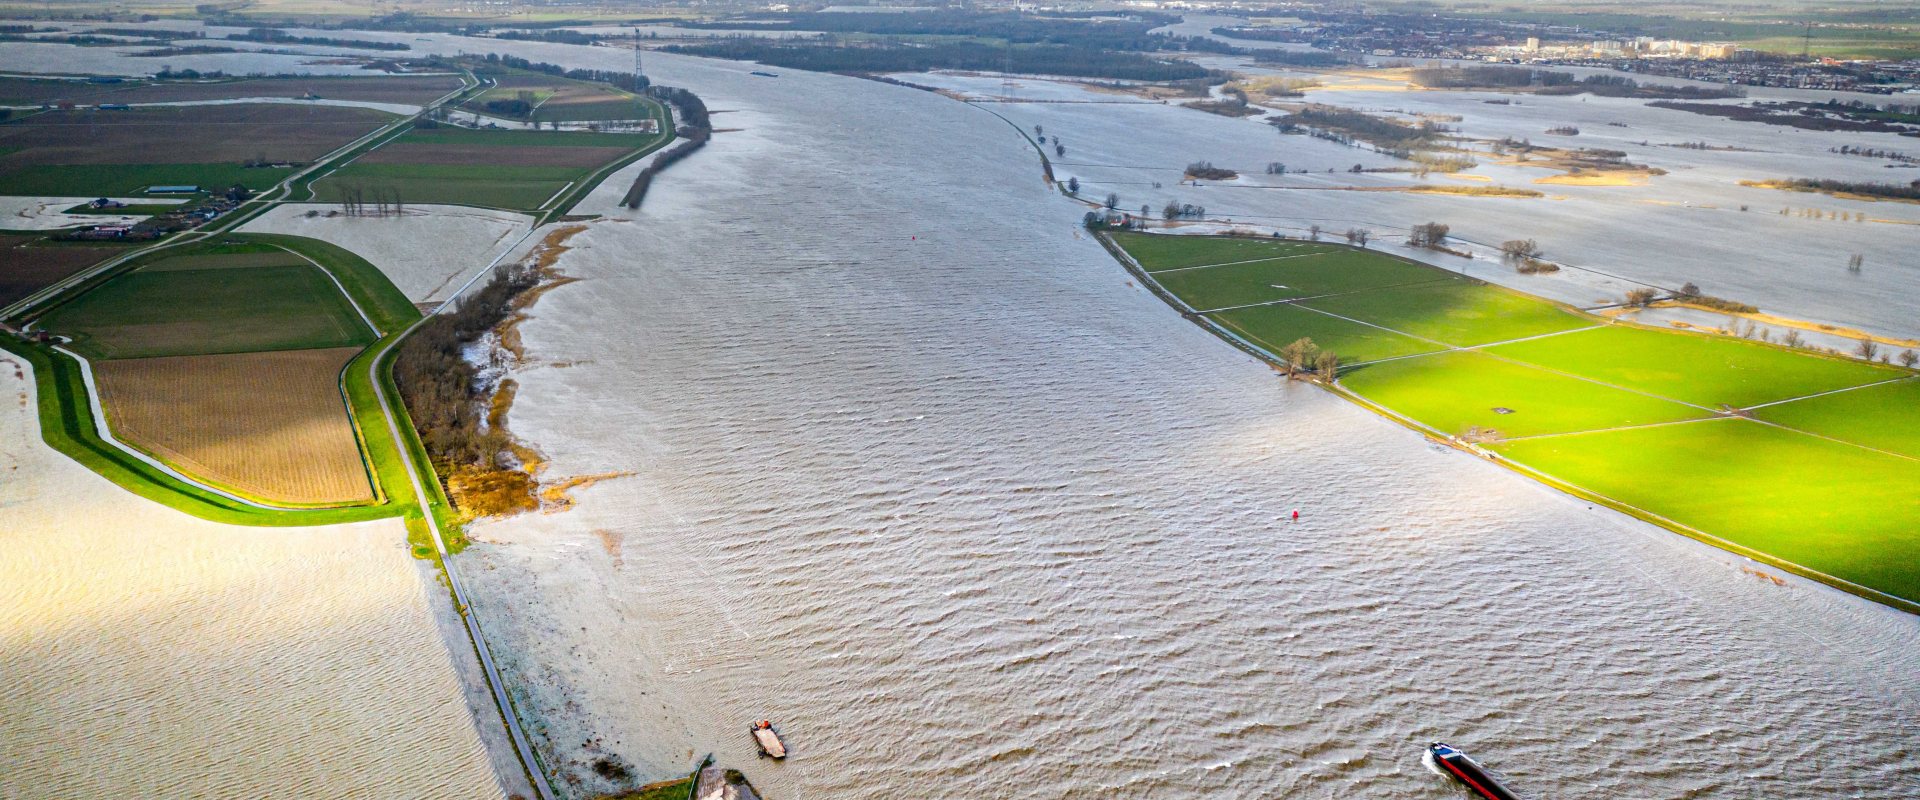 First Time River Rhine To Reach North Sea Via Dutch Polder Dutch Water Sector